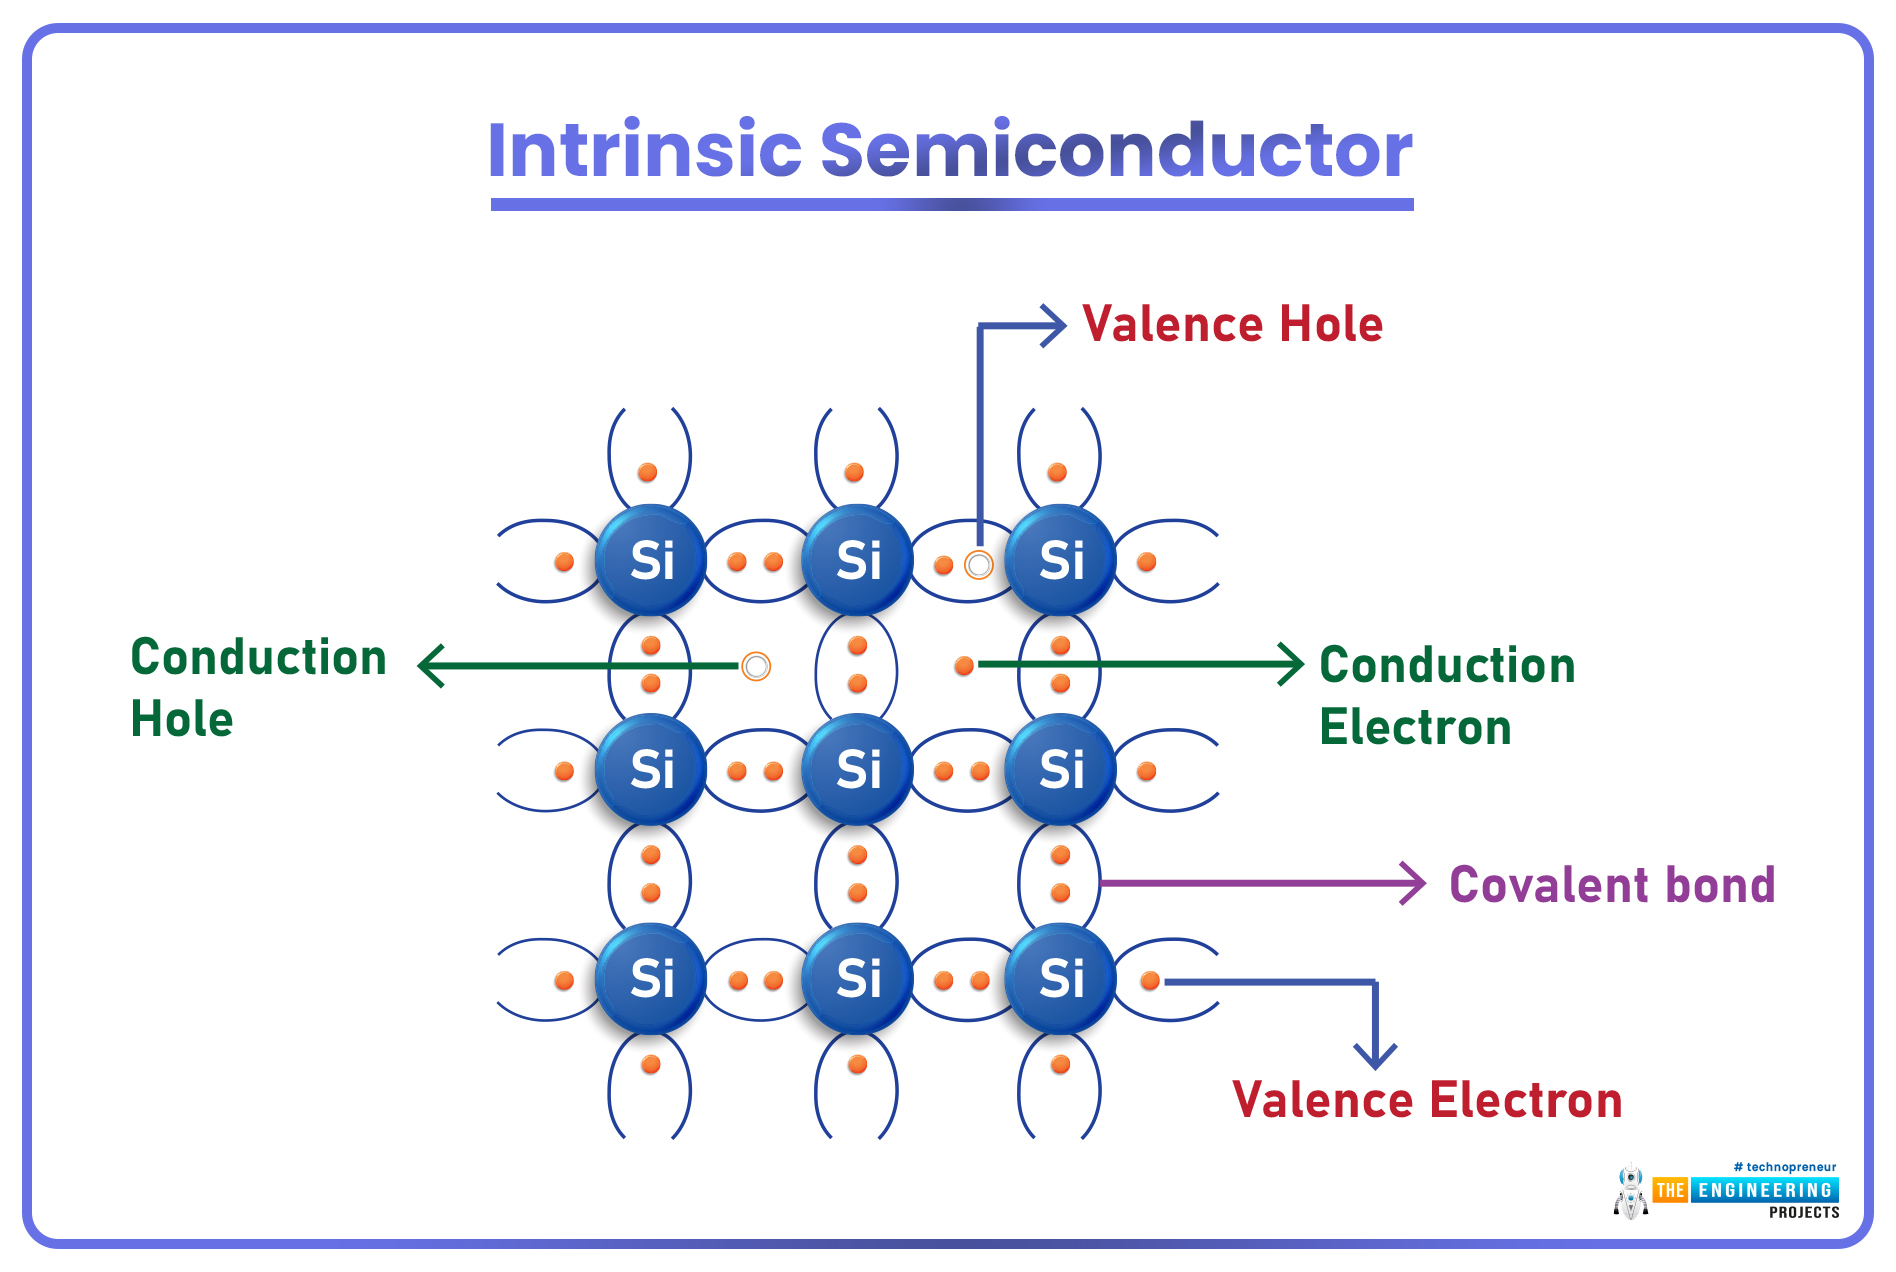 pn junction, n type semiconductor, p type semiconductor, silicon crystal, doing, impurities, reverse bias, forward bias junction